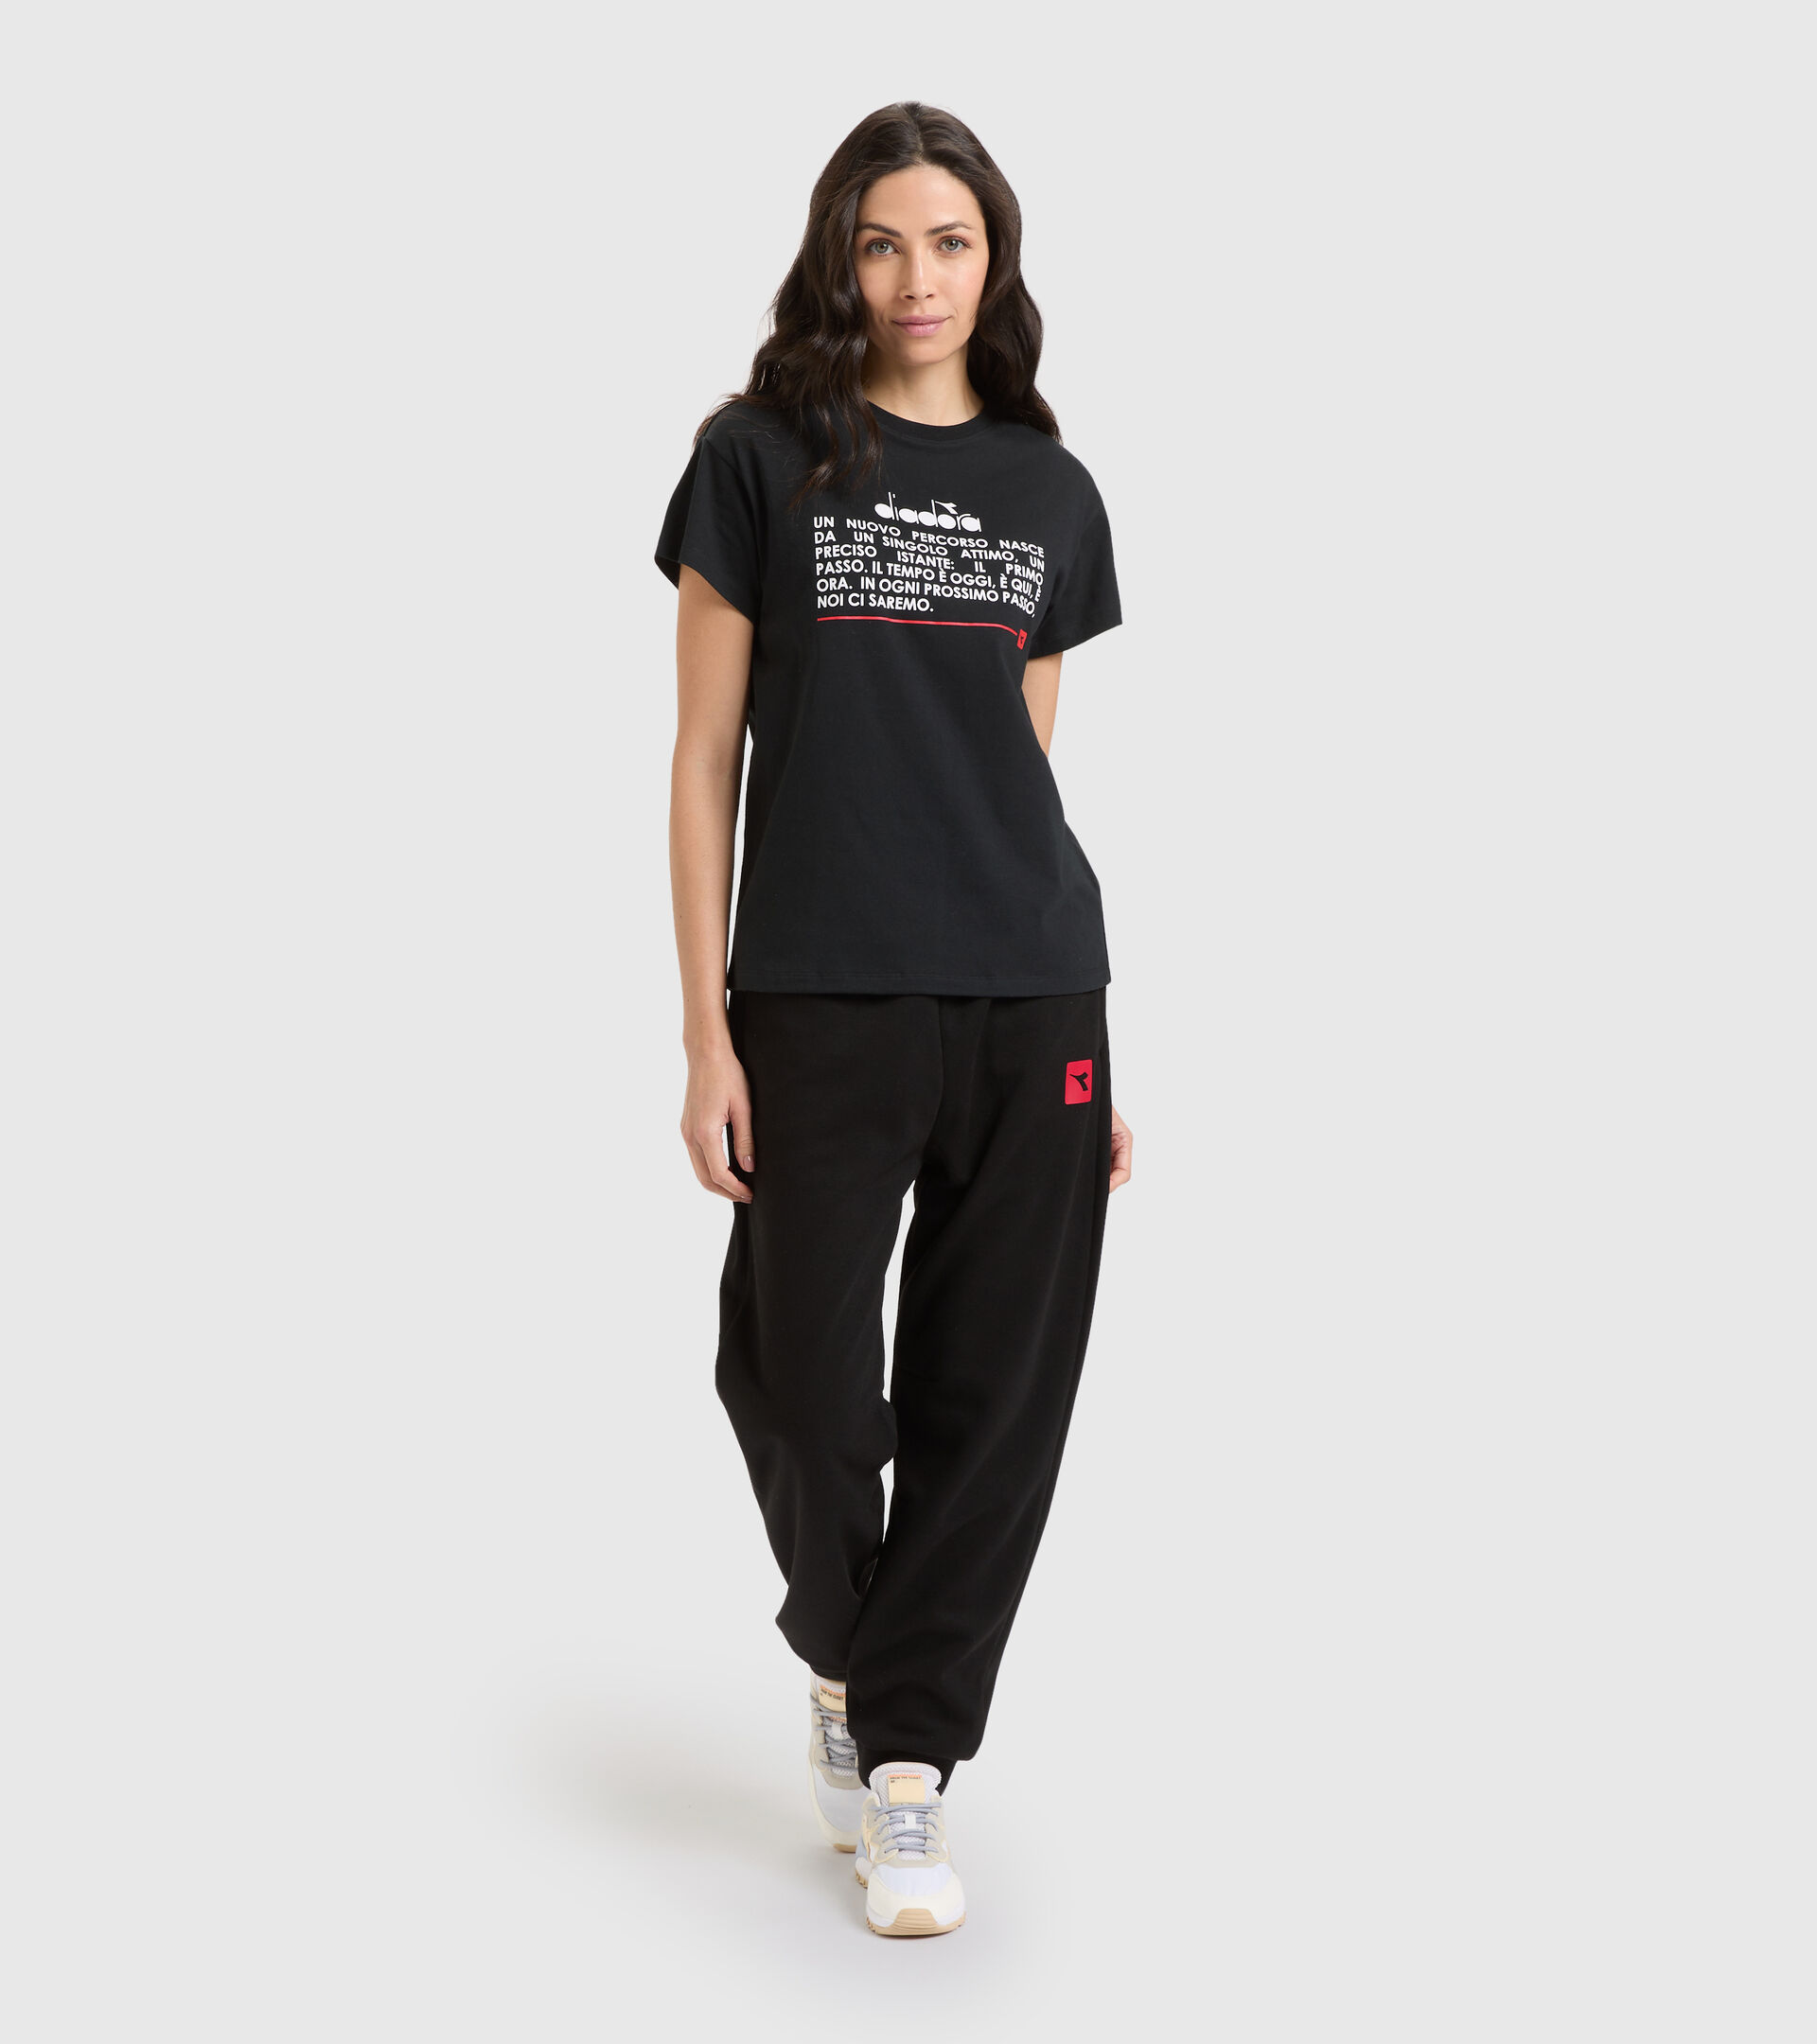 Camiseta deportiva - Mujer  L. T-SHIRT SS URBANITY NEGRO - Diadora